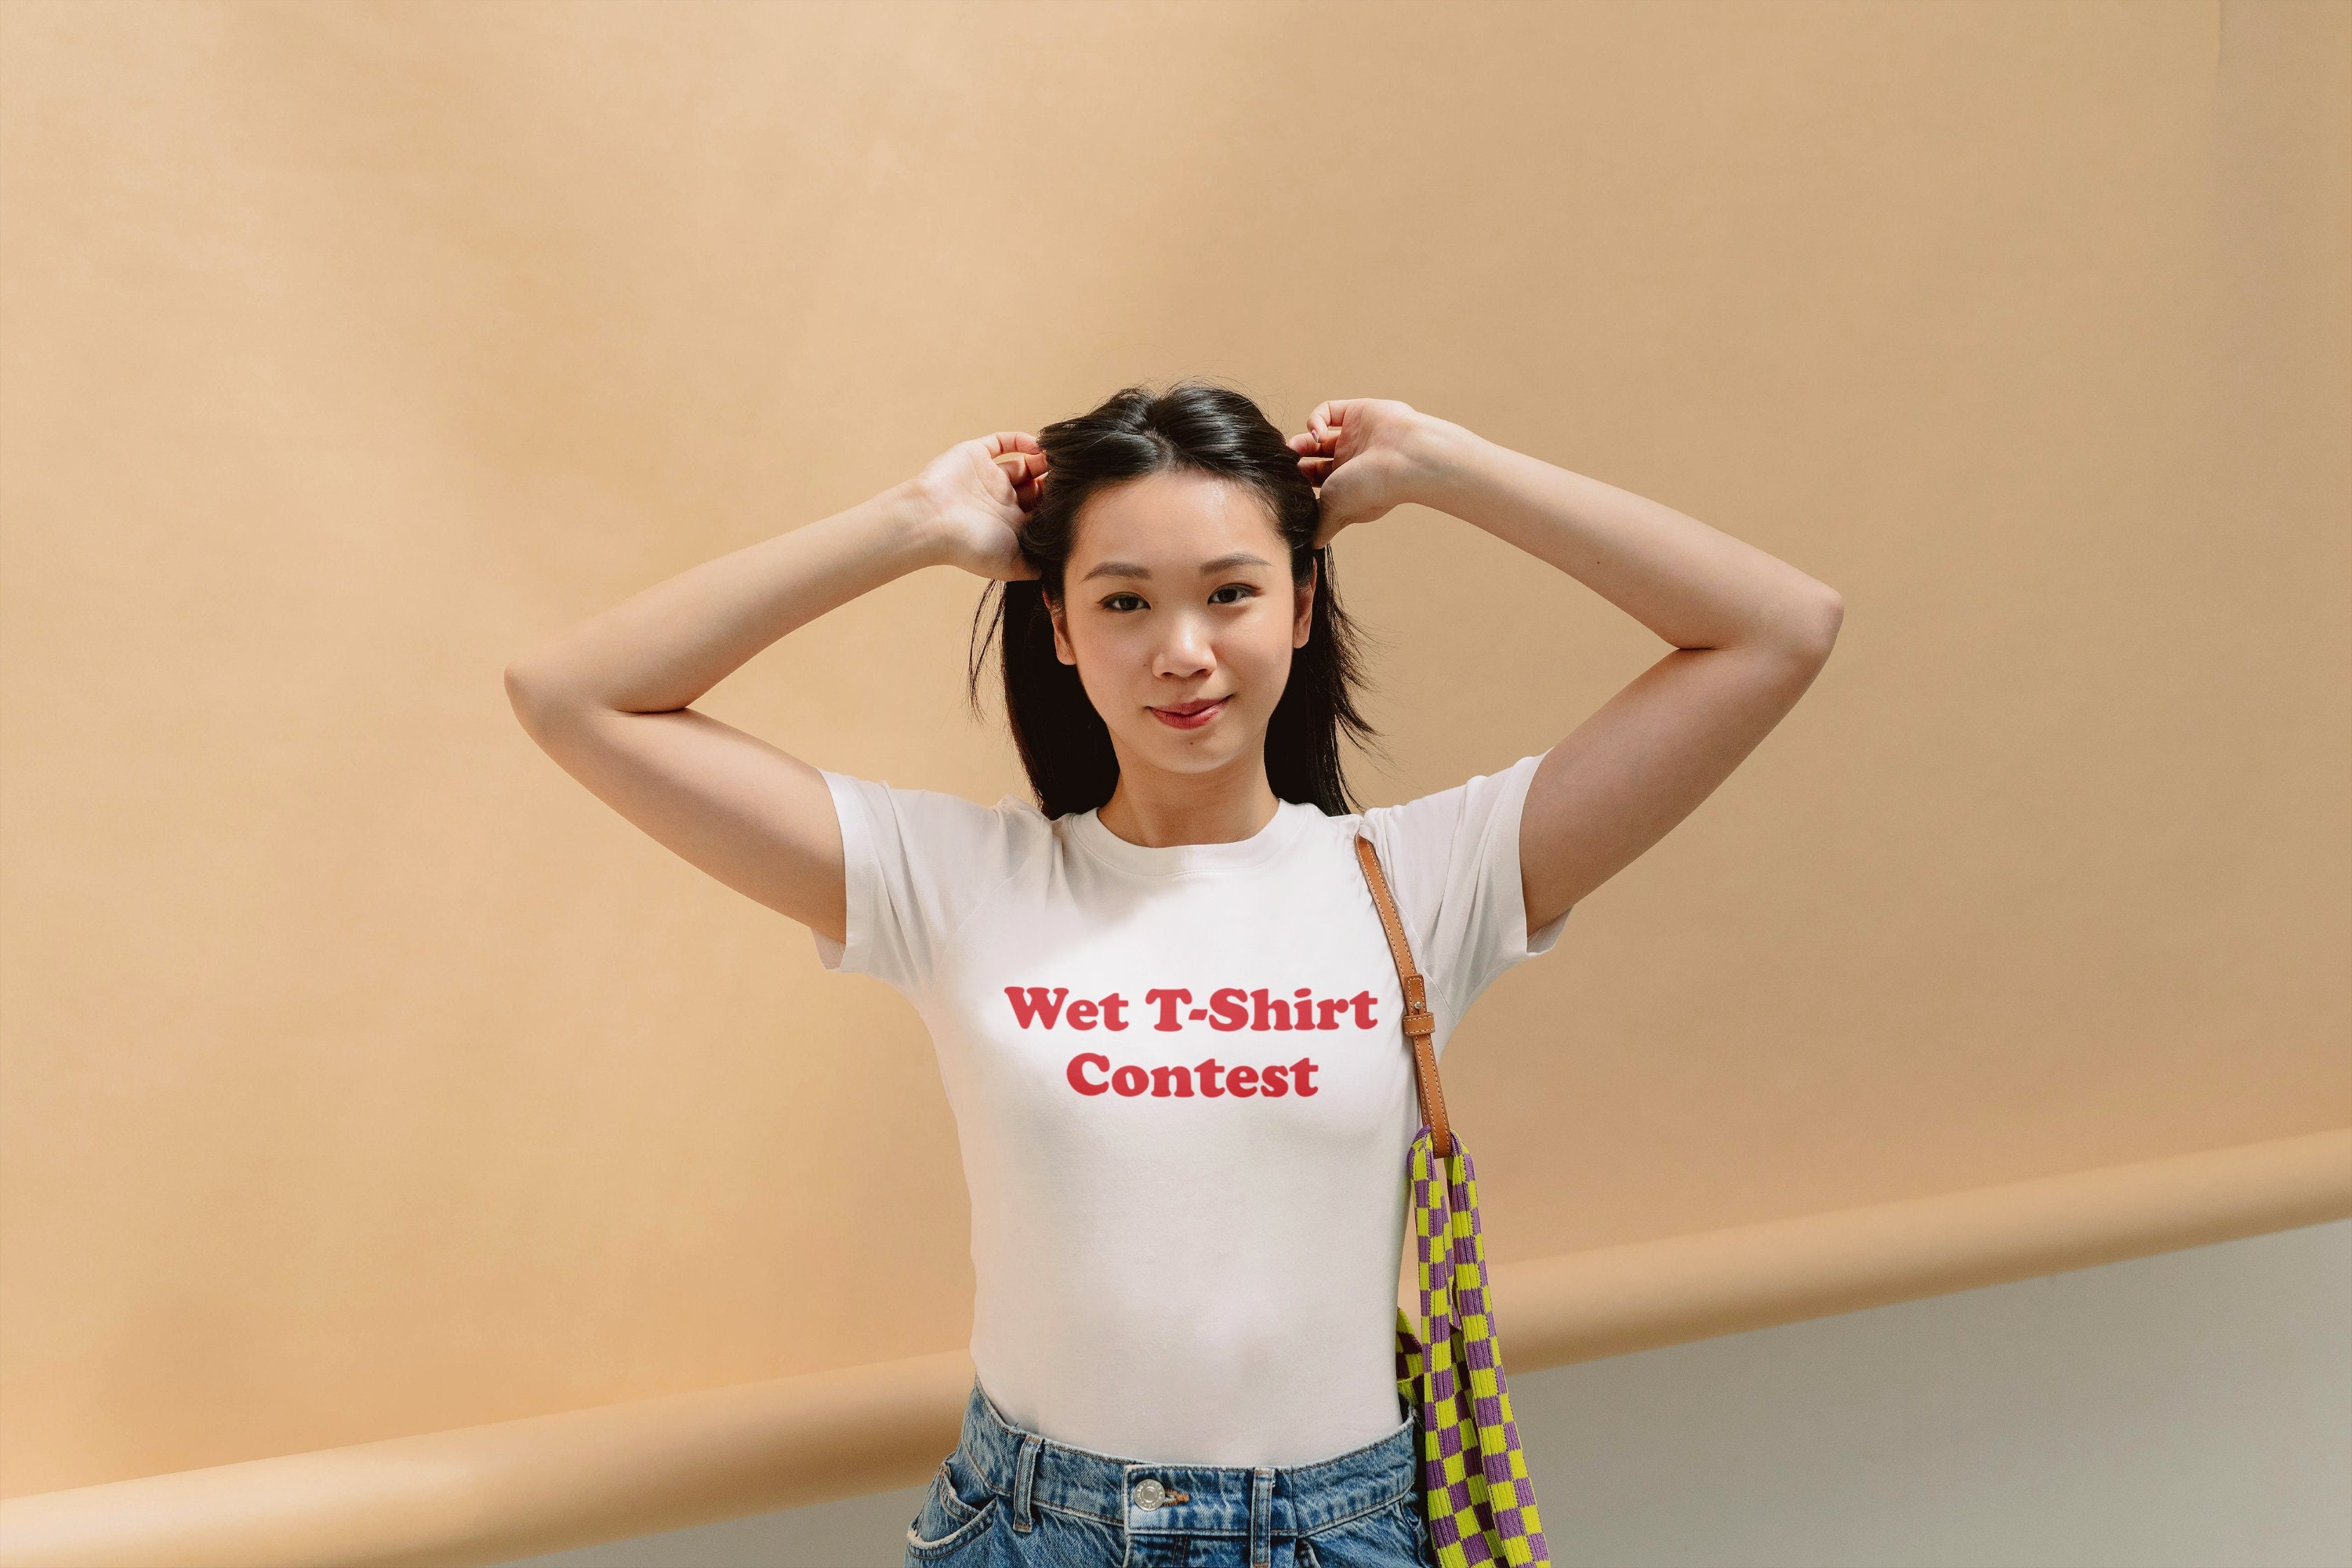 Wet tshirt contest meme